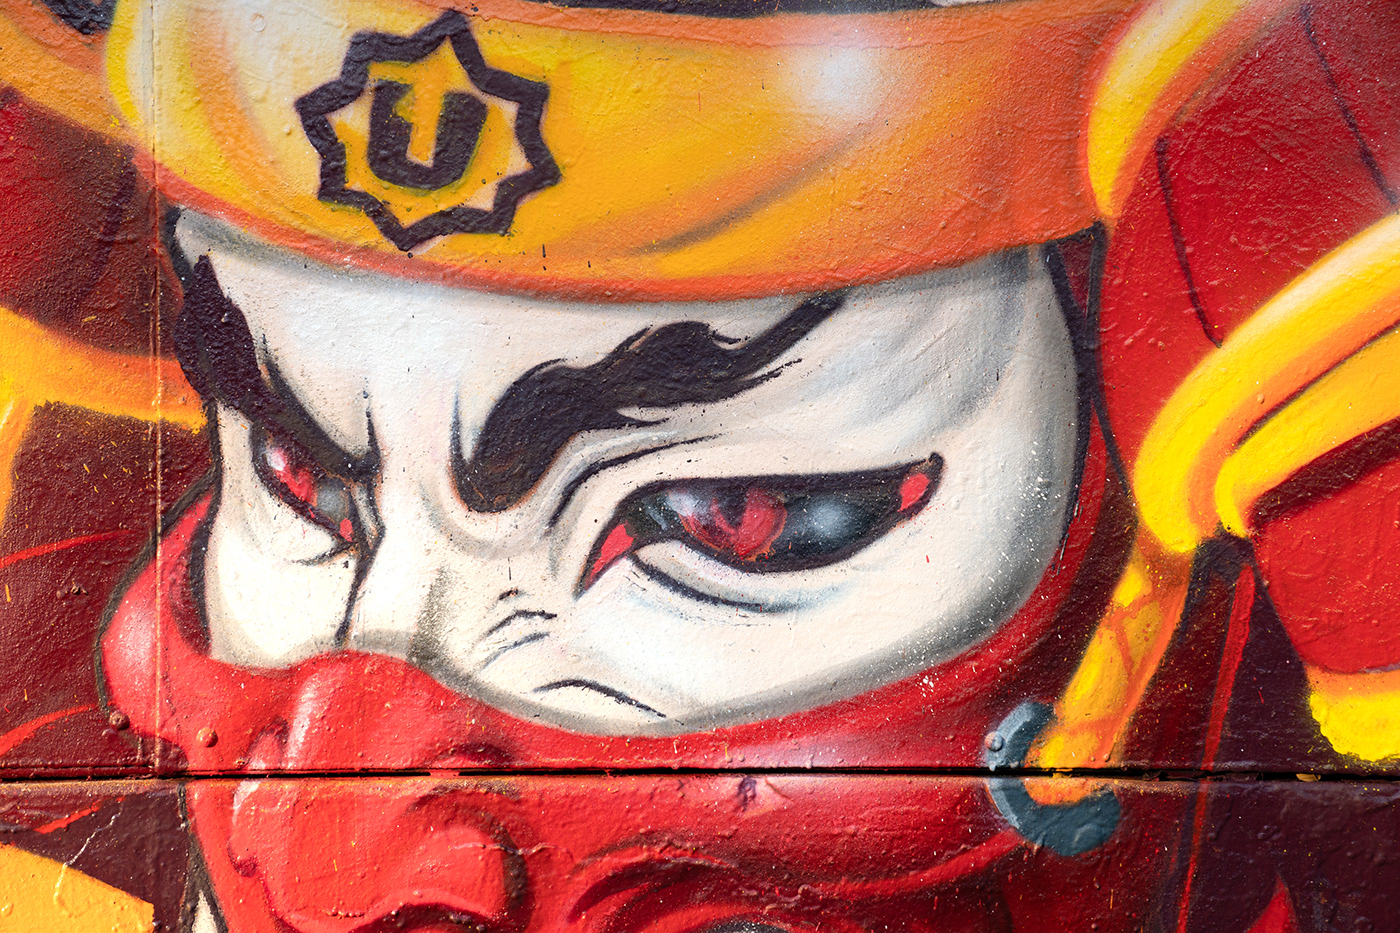 Graffiti spray paint samurai typography   ronin Street Art  painting   spray can pedmons